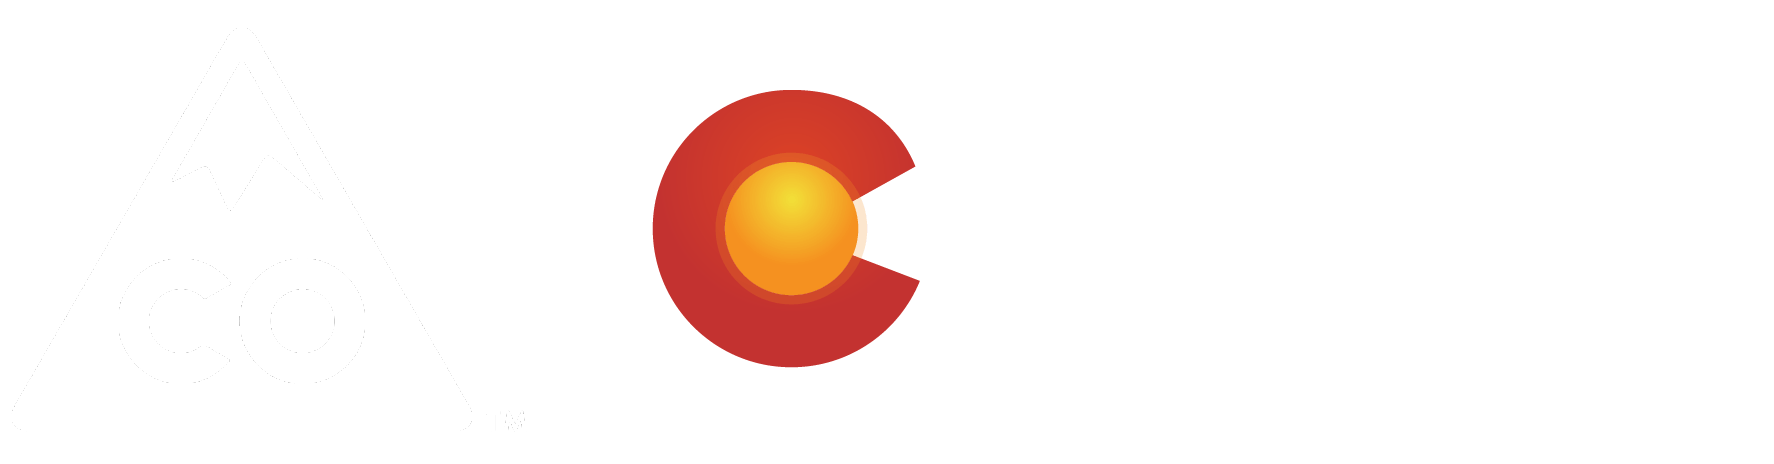 Co Logo - Colorado State Logo Licensing